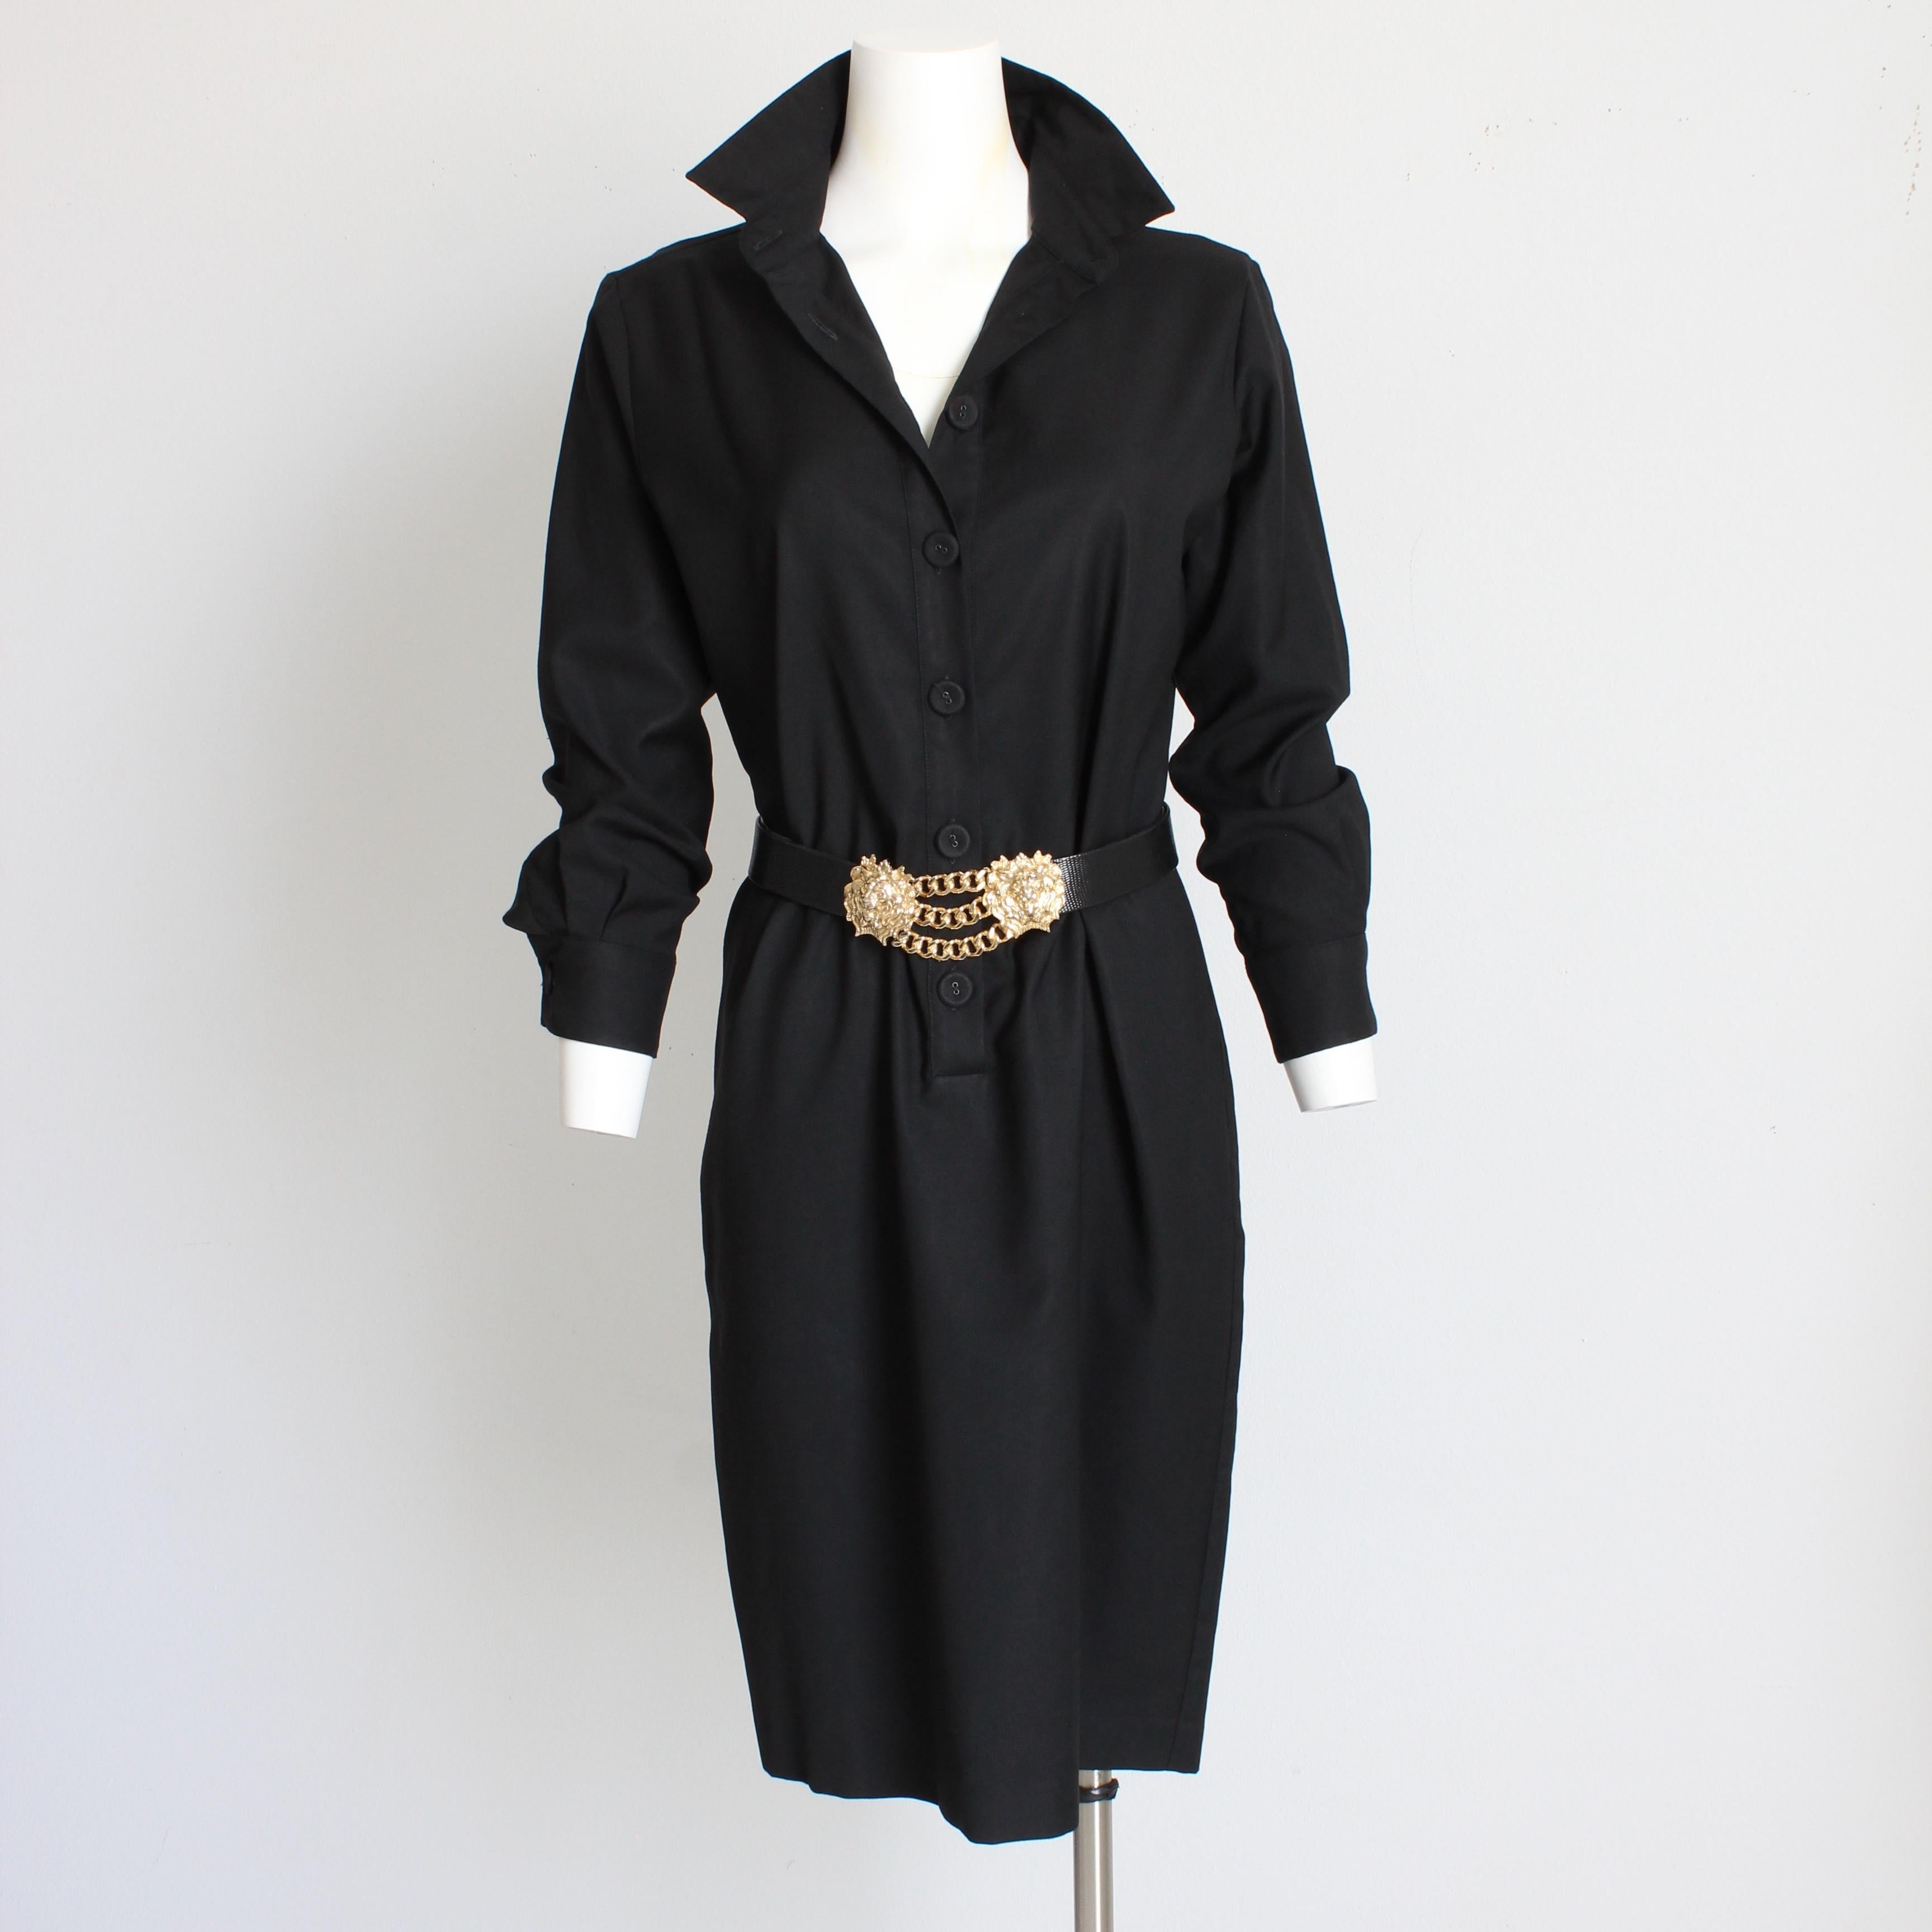 Bottega Veneta Dress Black Wool Twill Shirtwaist LBD Button Front Sz 42 Italy For Sale 1